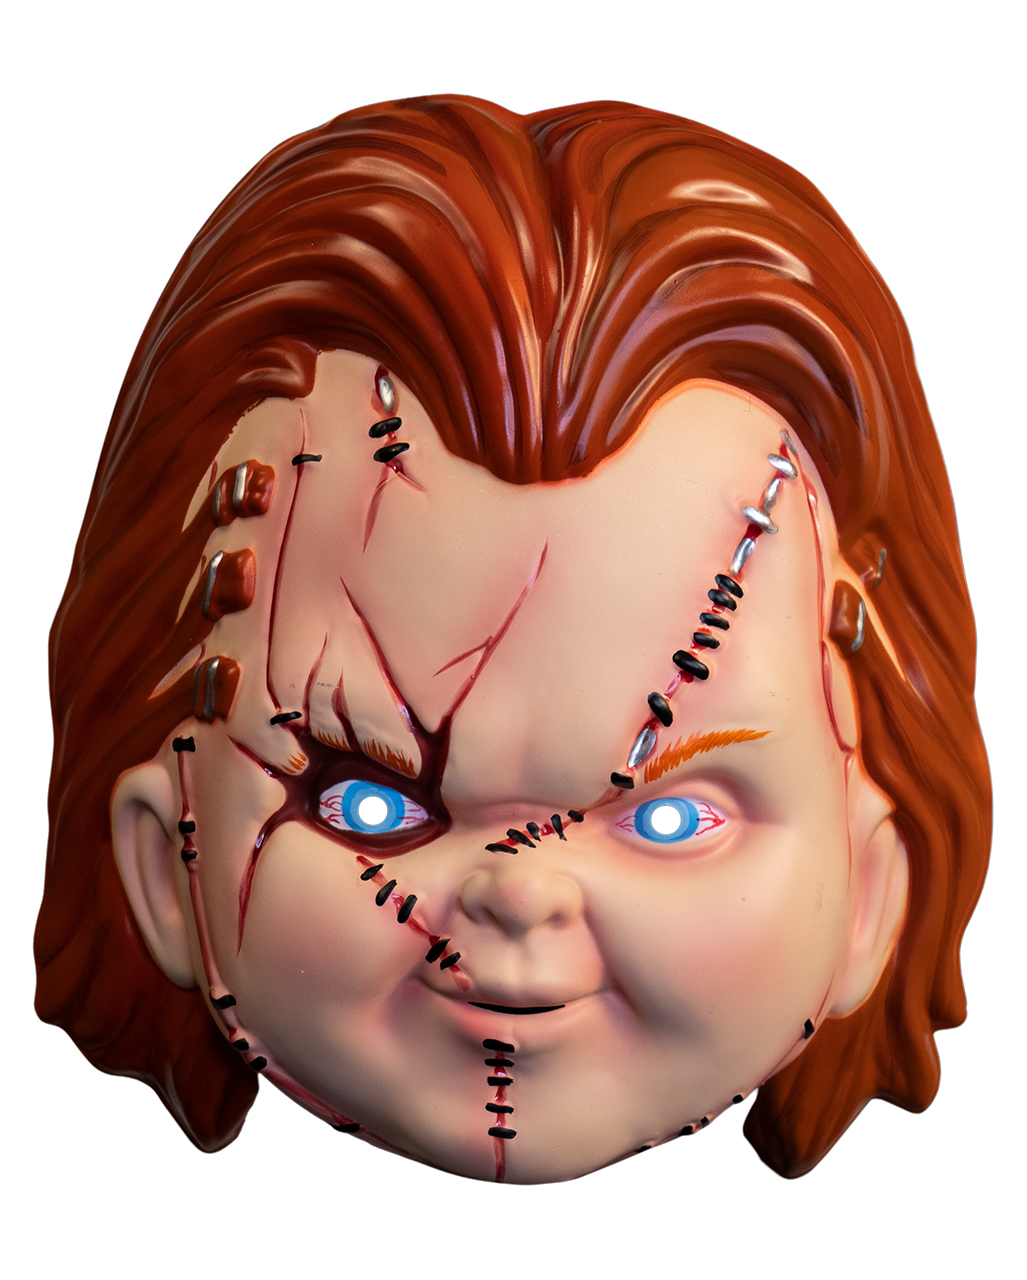 Seed of Chucky - Chucky with Scars Maske bestellen von Horror-Shop.com